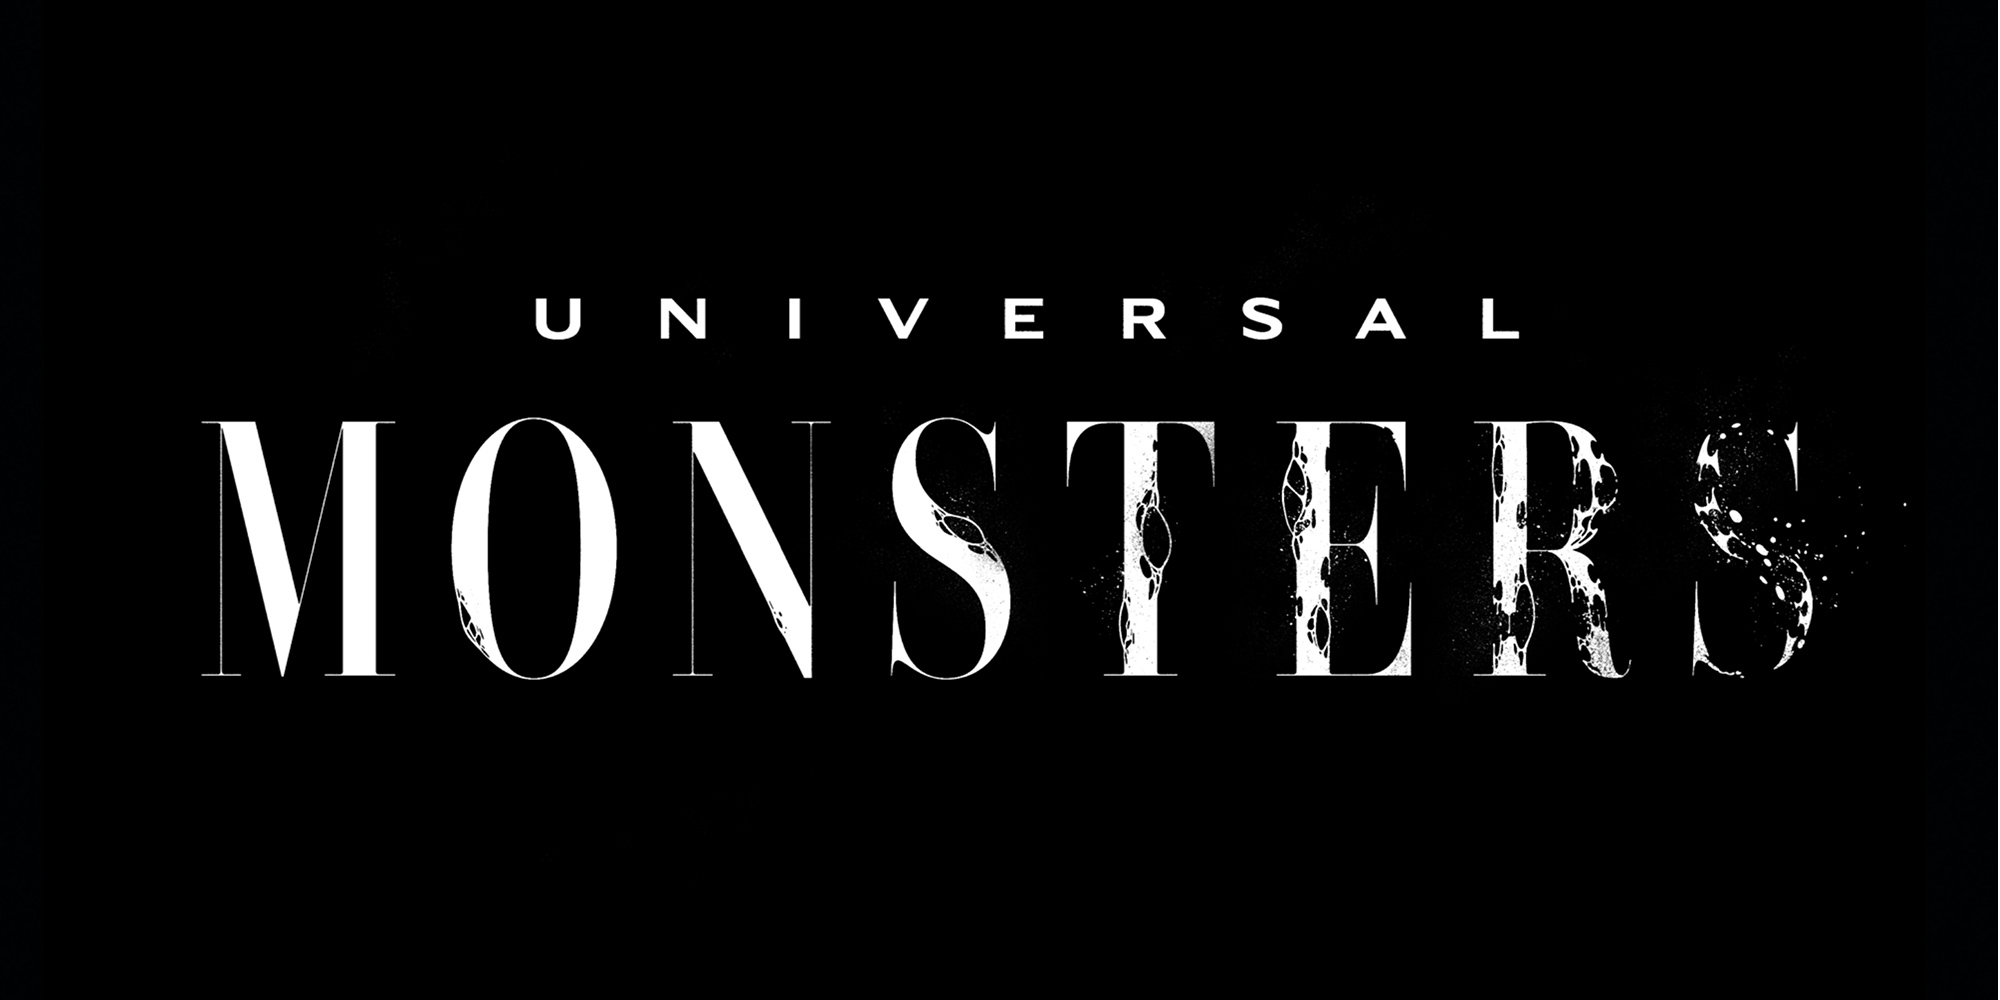 Universal monsters 02